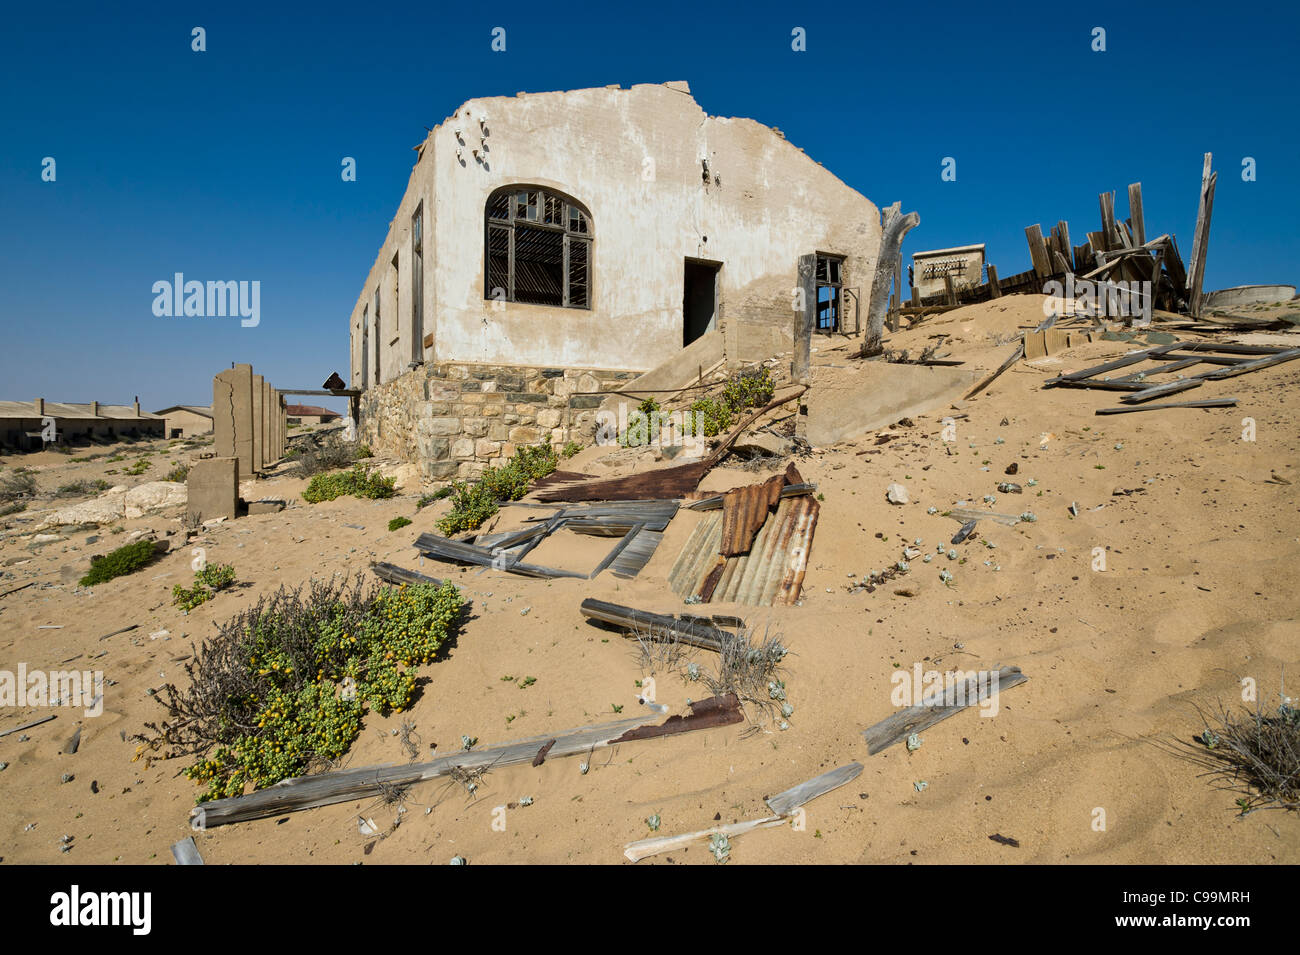 Abandoned house in Kolmanskop a former diamond mine in Namibia Stock Photo